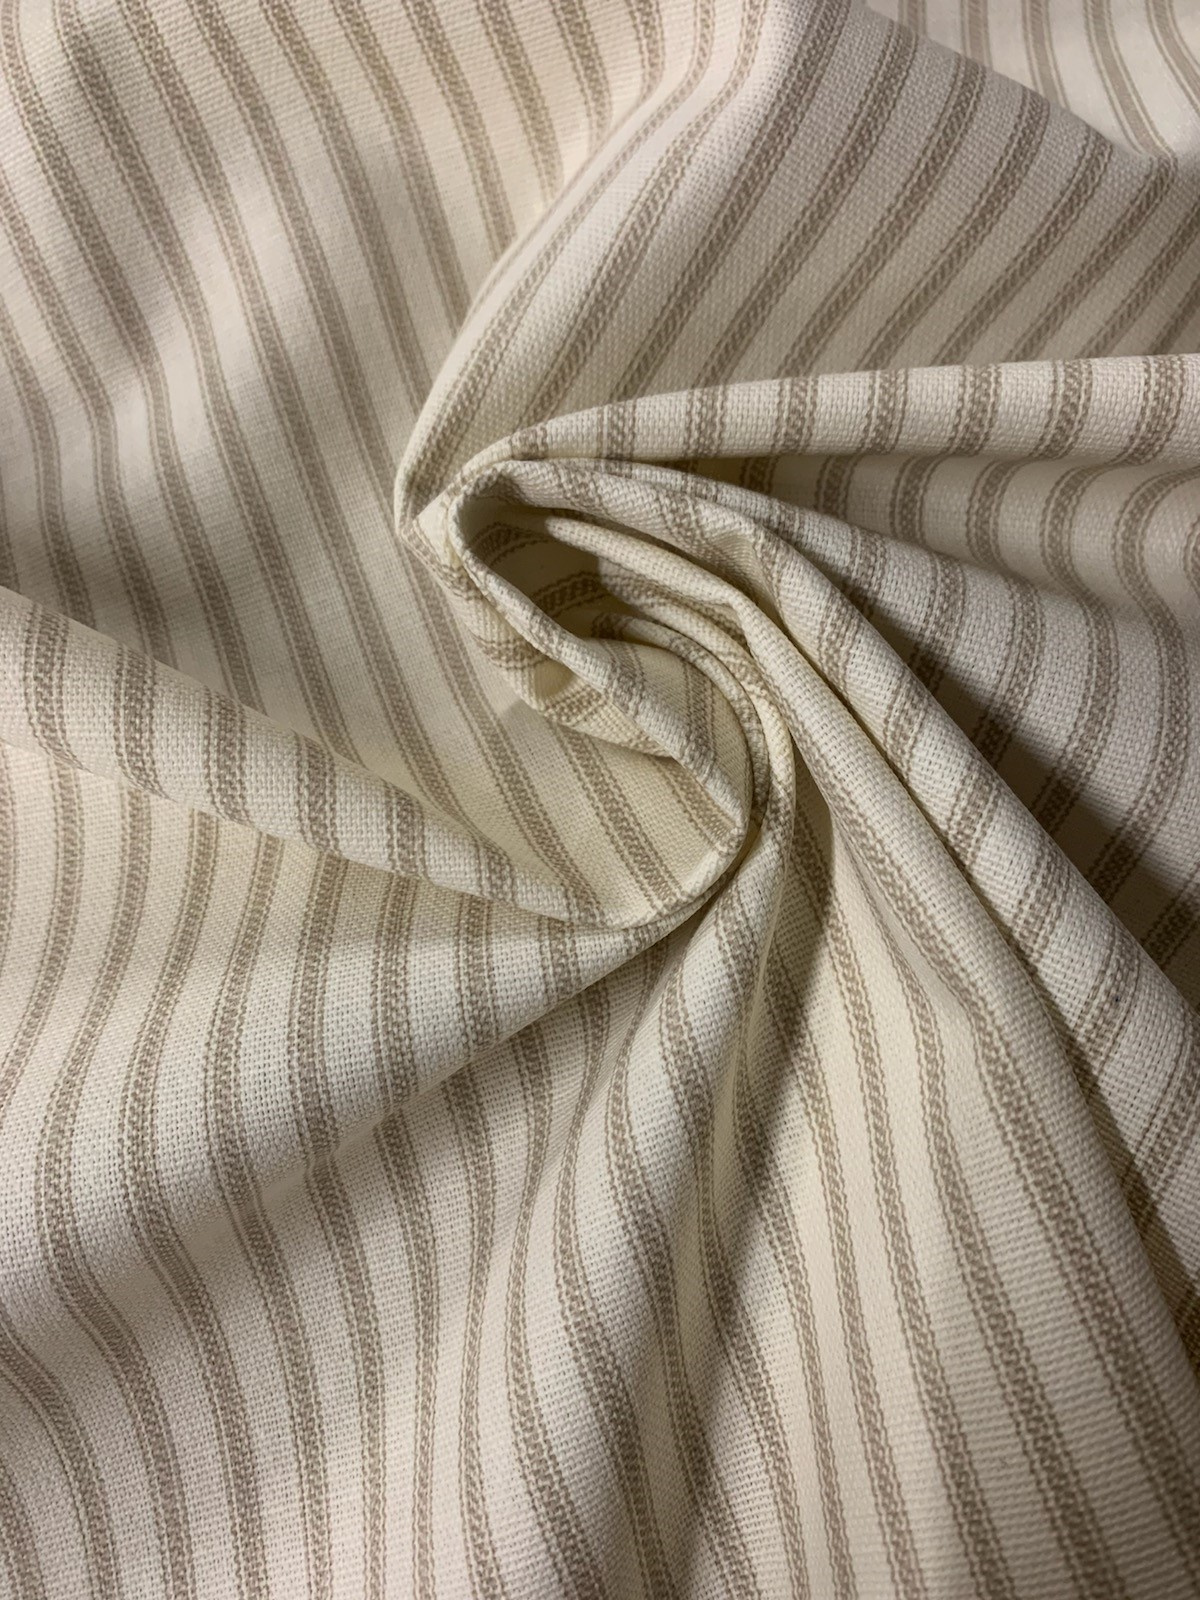 54 Khaki Stripe Ticking Fabric - Per Yard [KHAKI-TICK] - $5.49 :  , Burlap for Wedding and Special Events